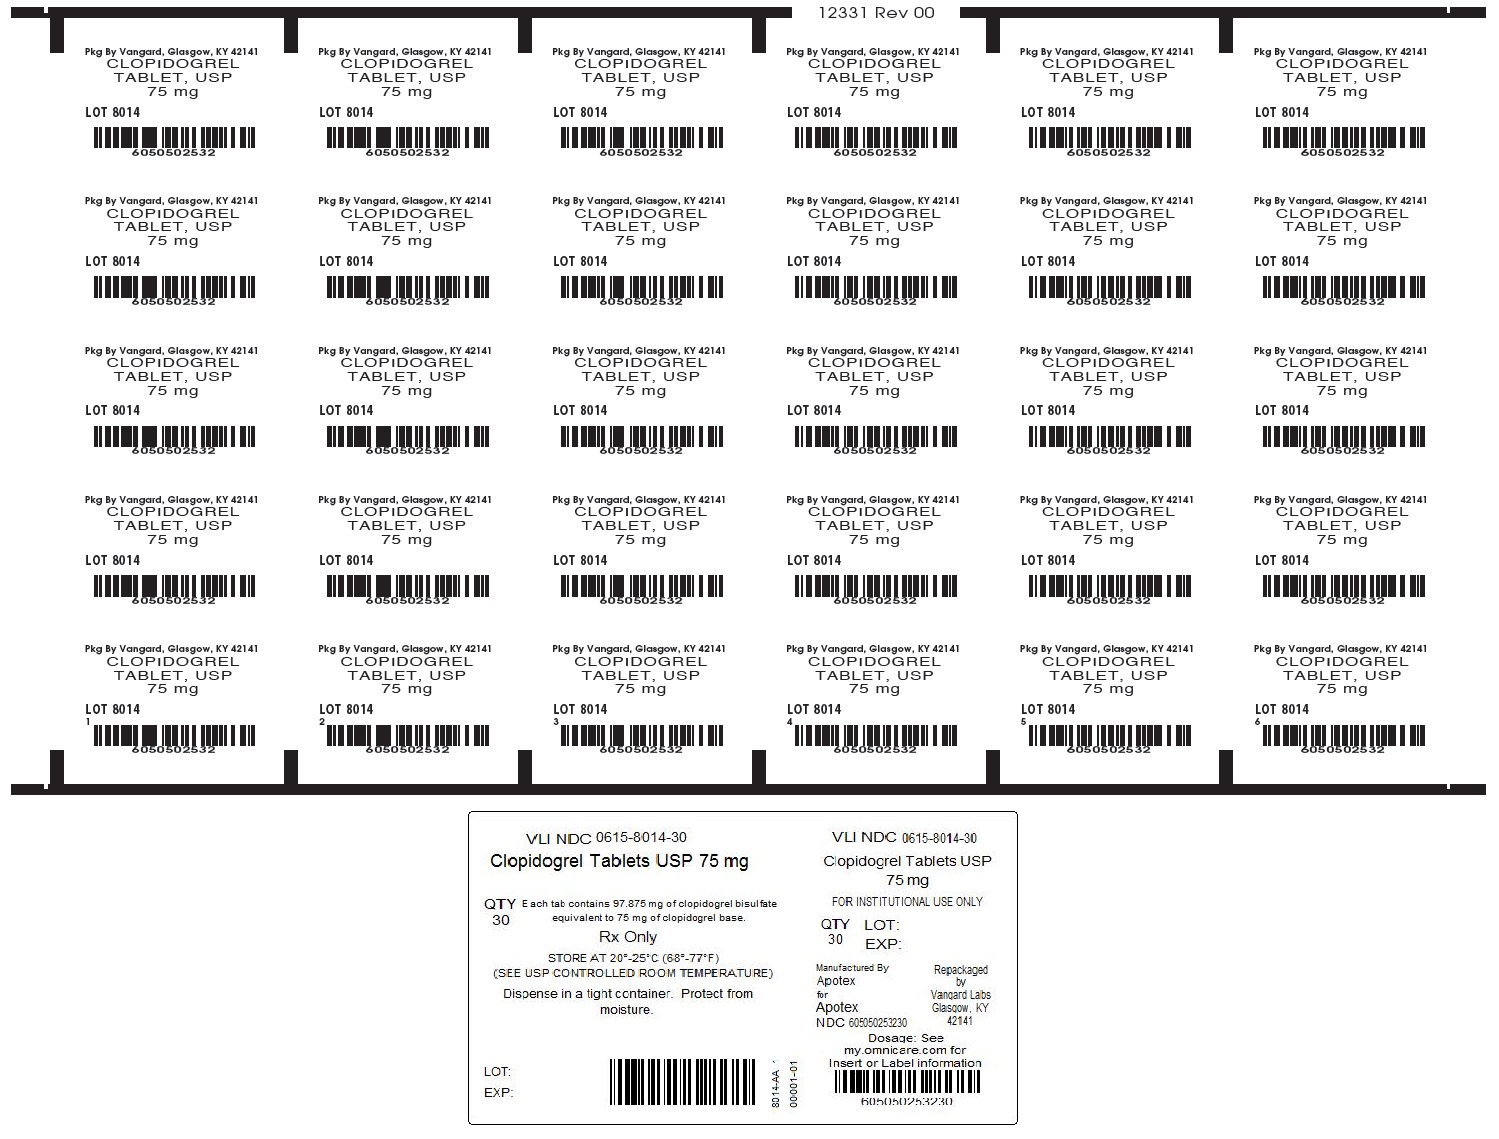 Clopidogrel Tabs 75mg unit-dose label